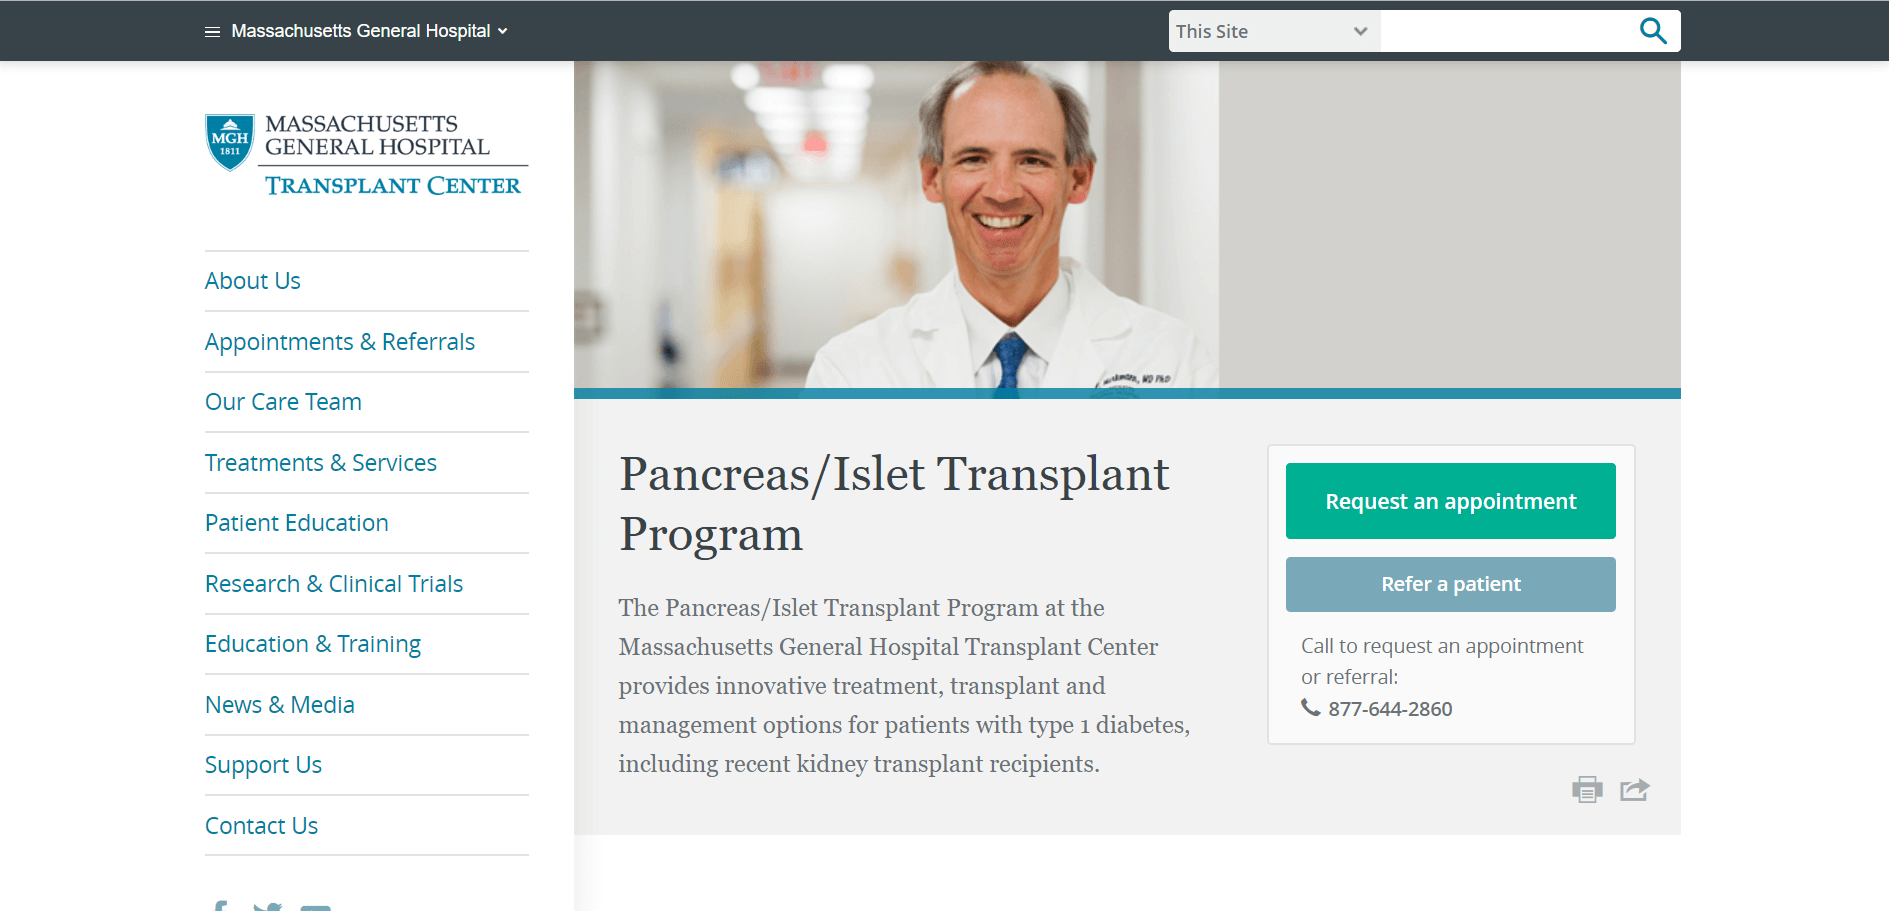 Massachusetts General Hospital Transplant Center, Pancreas/Islet Transplant Program